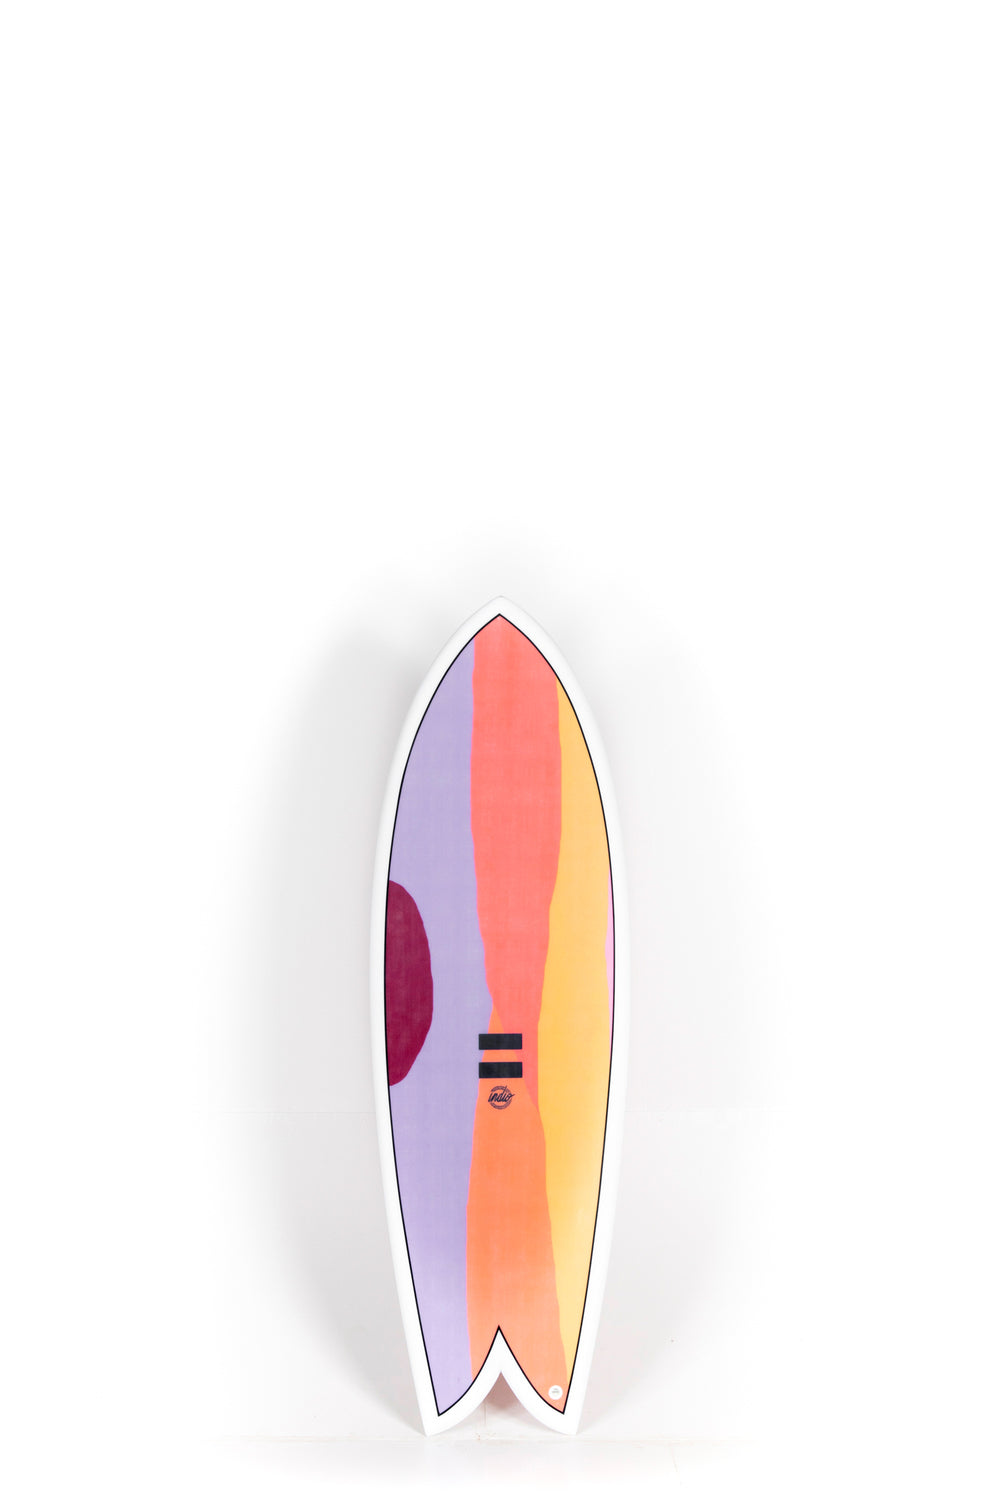 Indio Surfboards - DAB India - 5’5” x 20 7/8 x 2 1/2 x 33.5L.